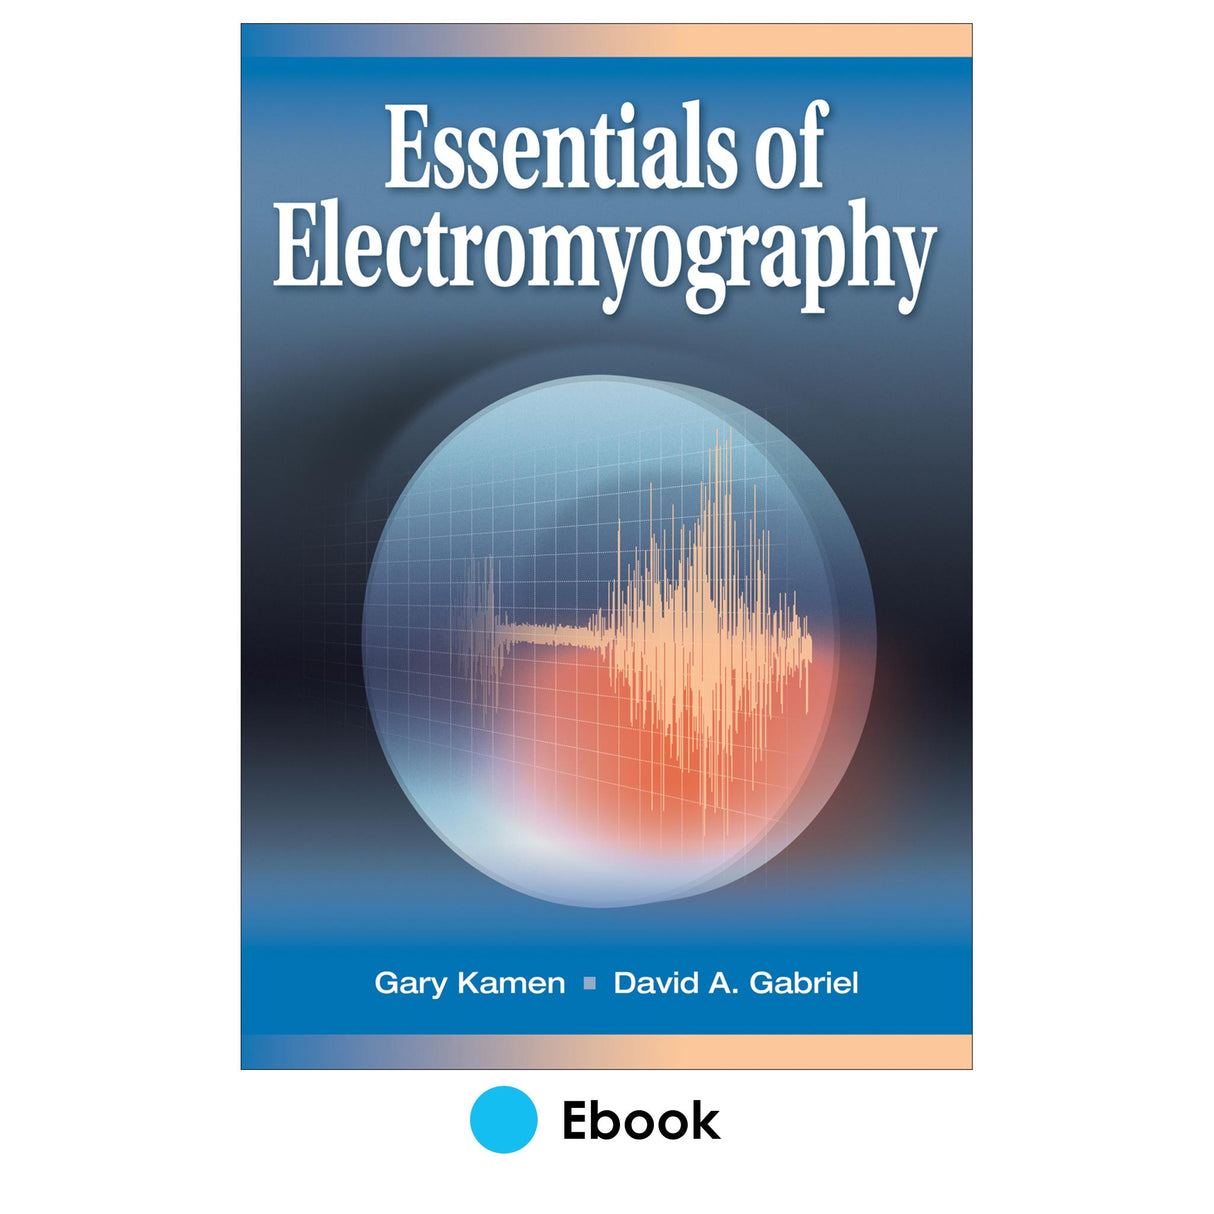 Essentials of Electromyography PDF